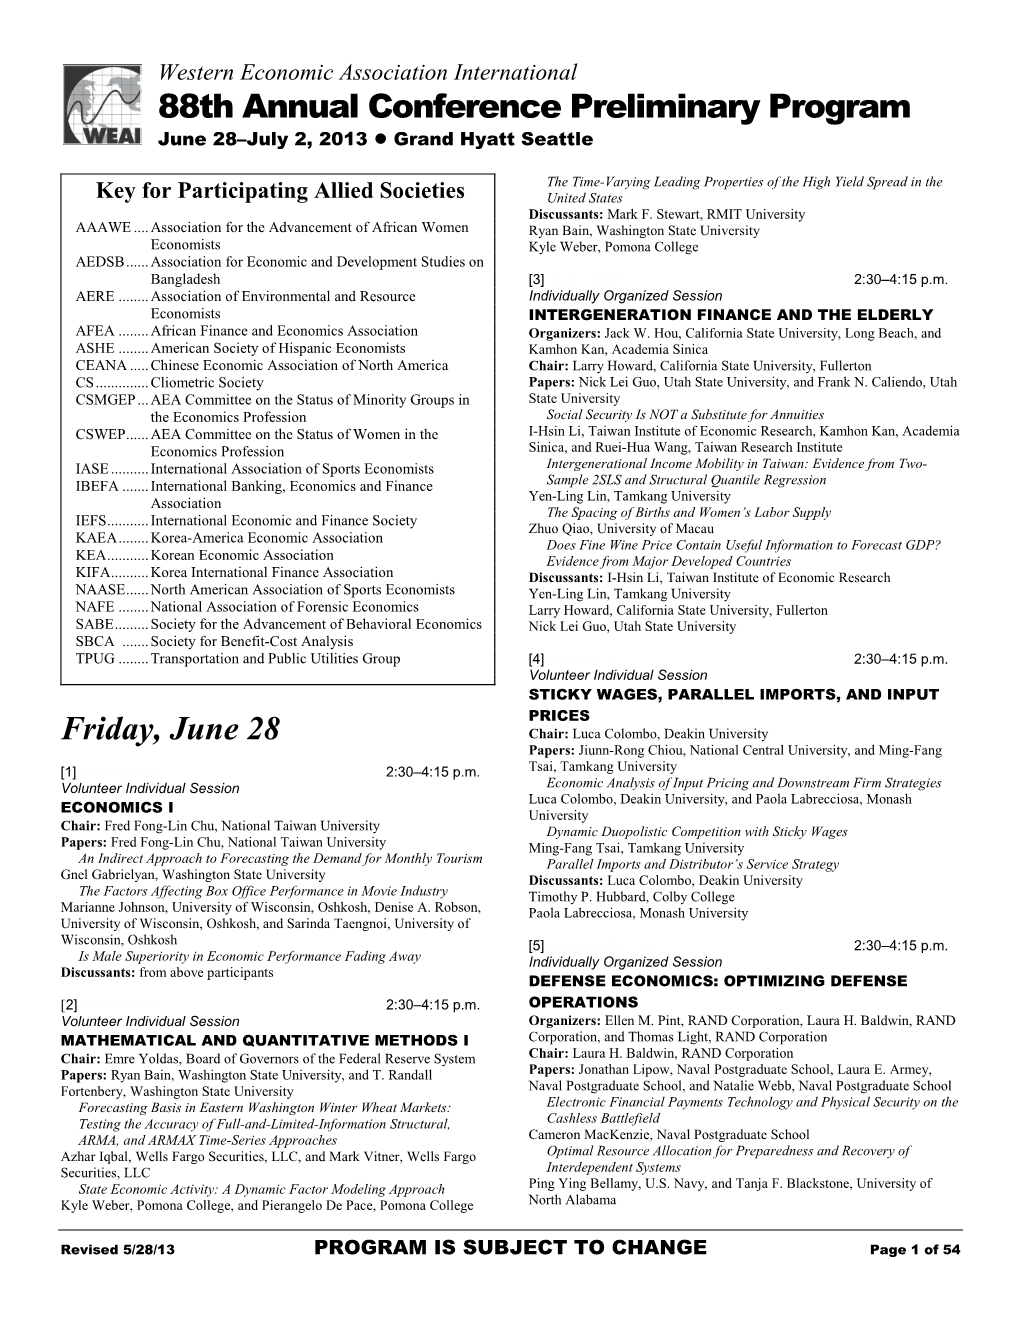 Seattle Conference Program